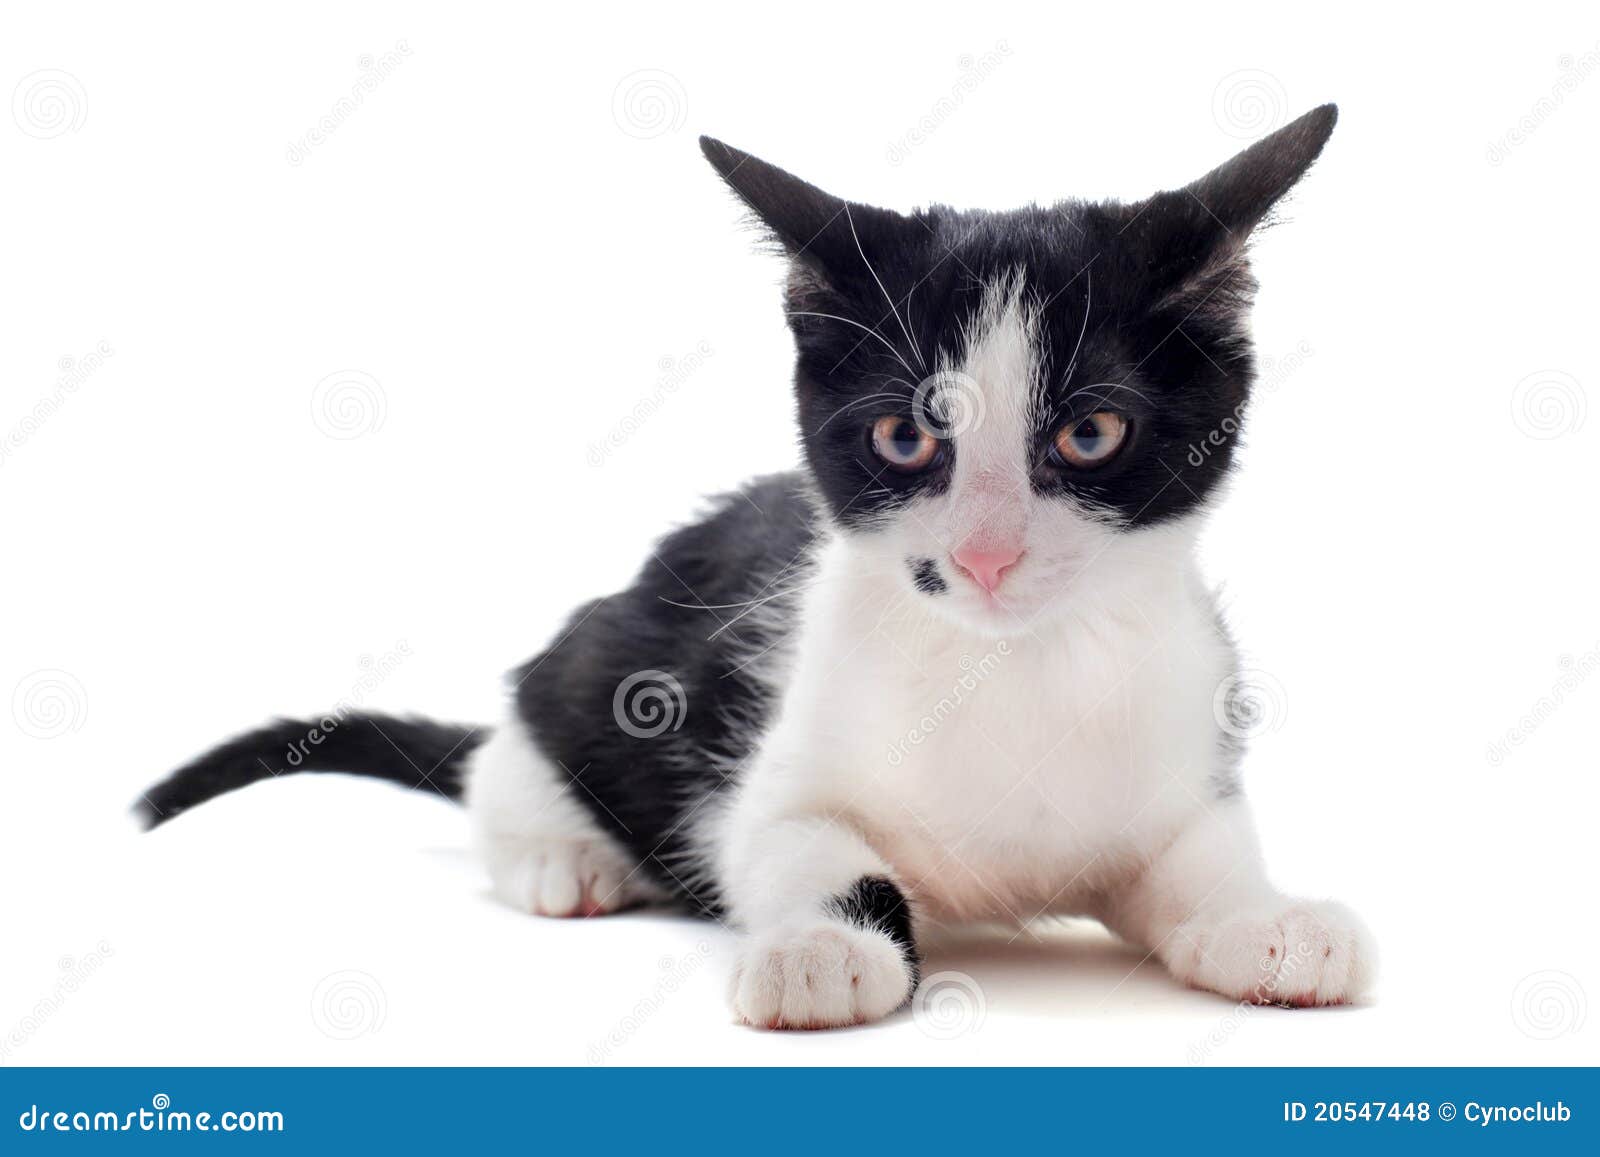 Black and white kitten stock photo. Image of studio, alertness - 20547448